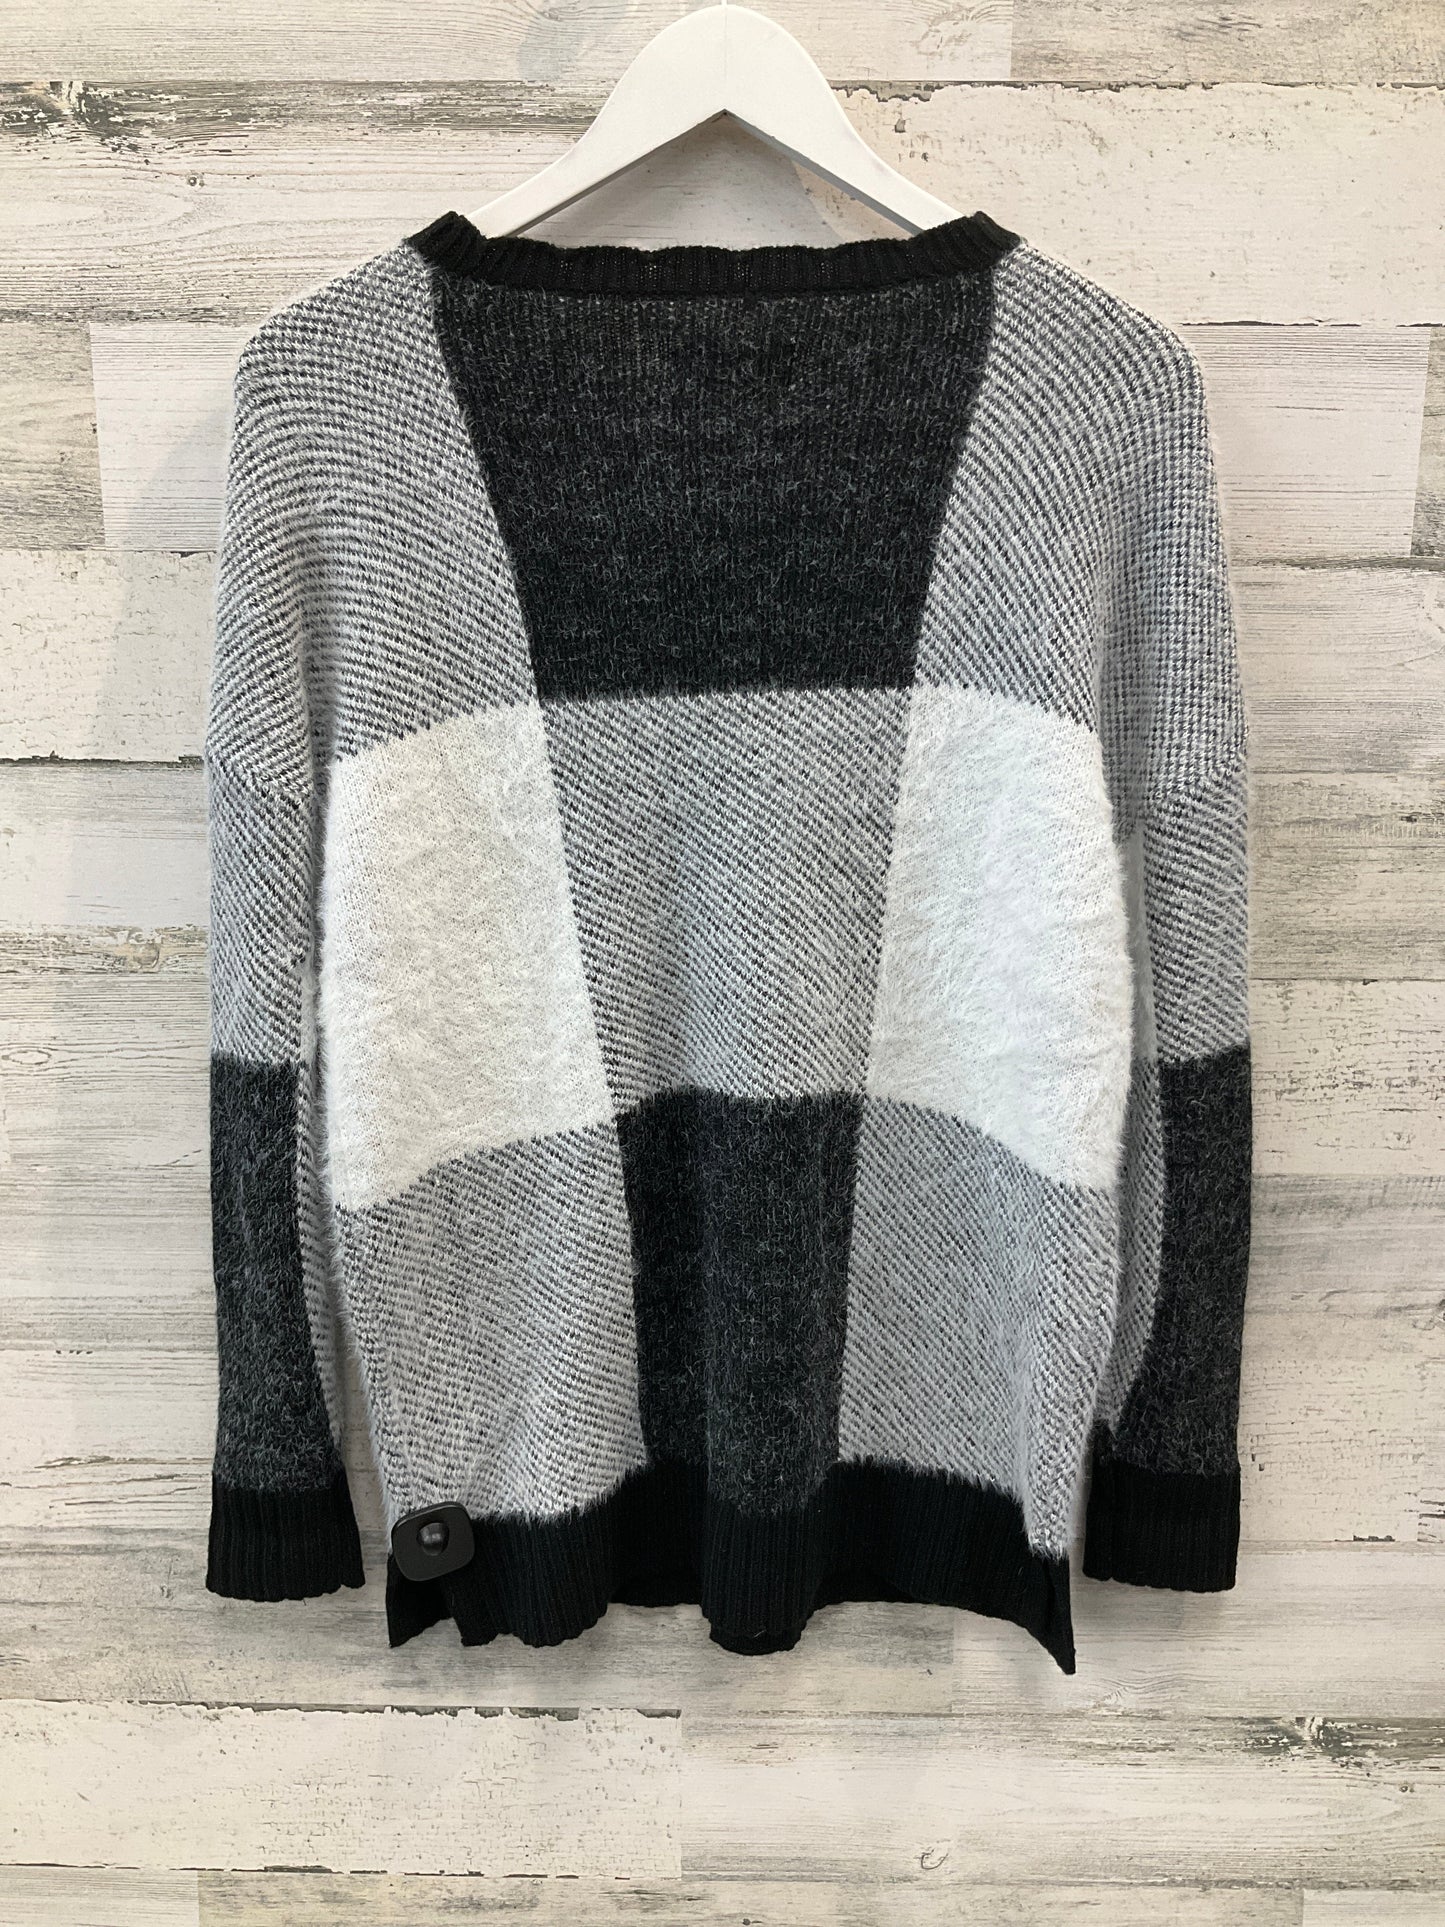 Sweater By Elle  Size: Xs